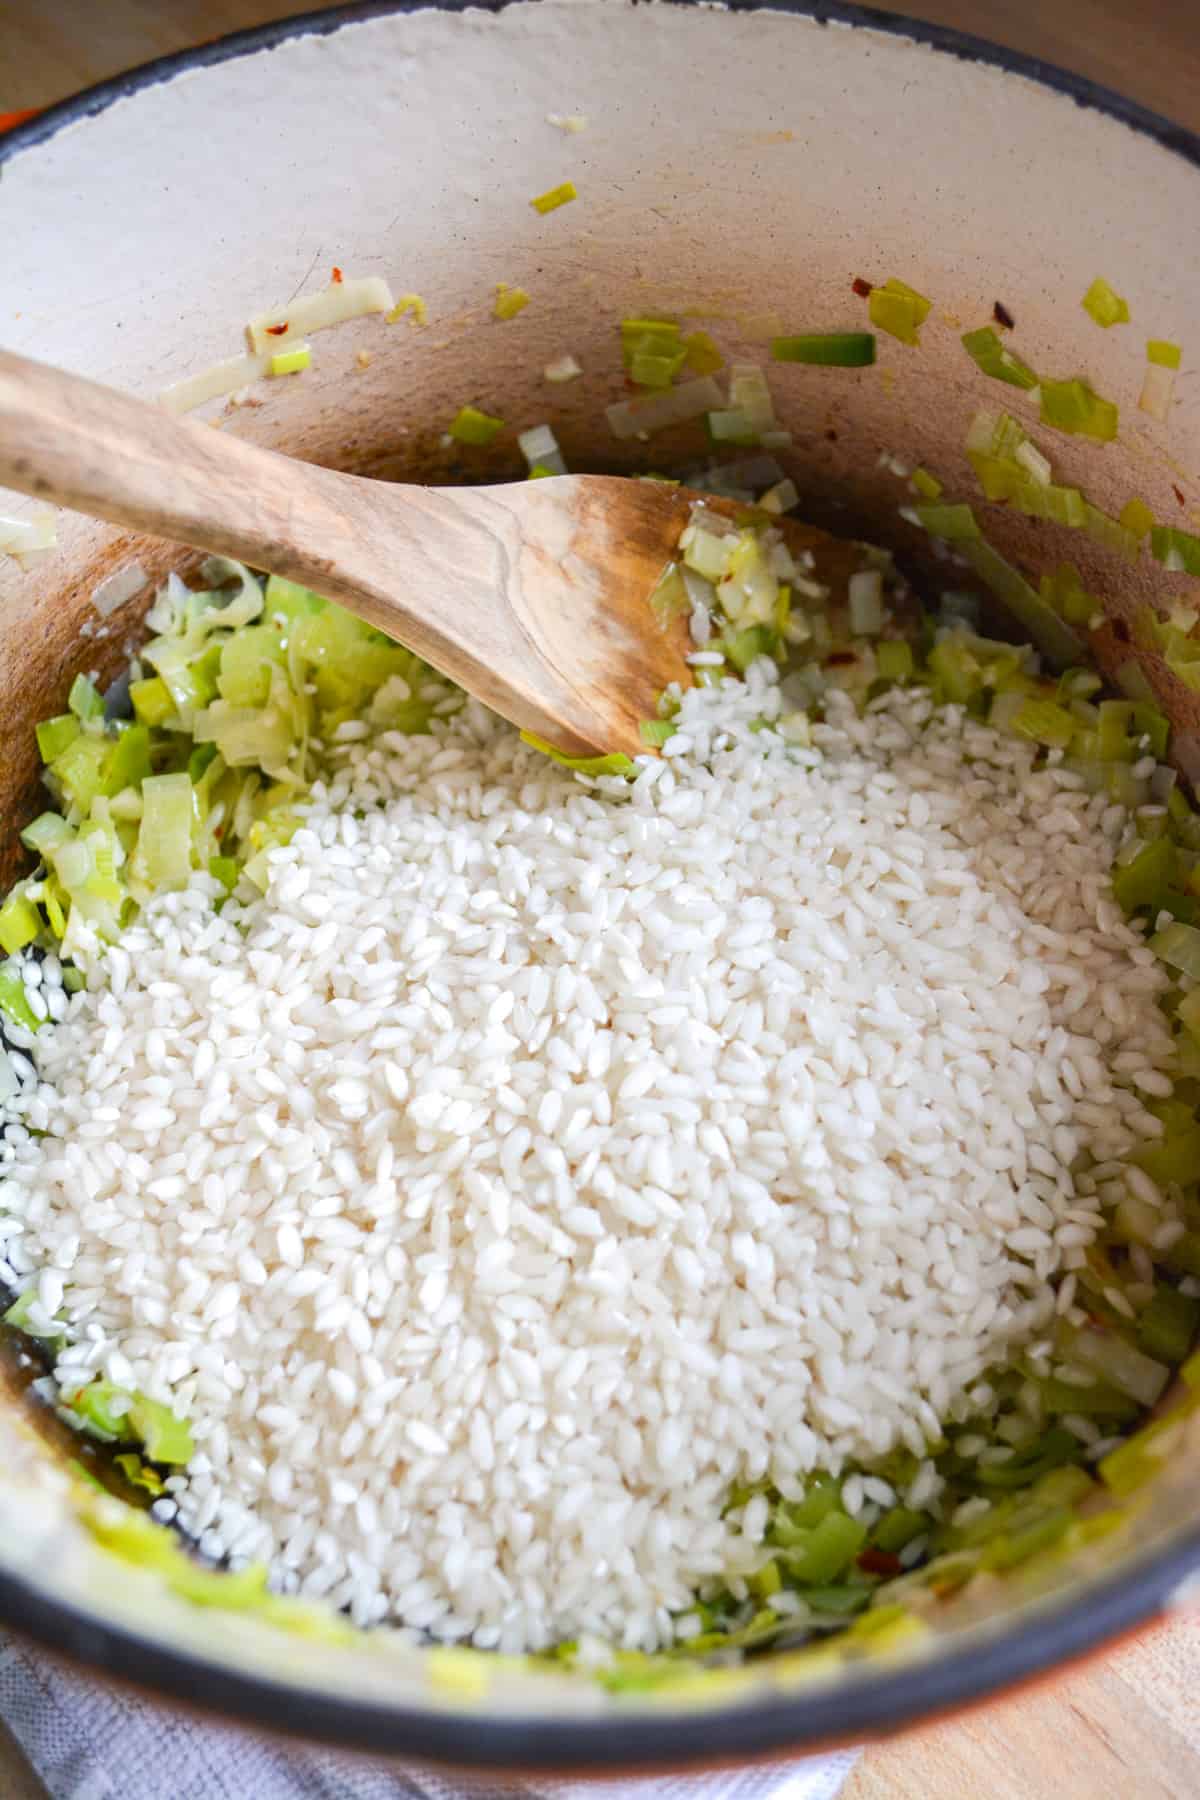 Arborio rice added into the pot.